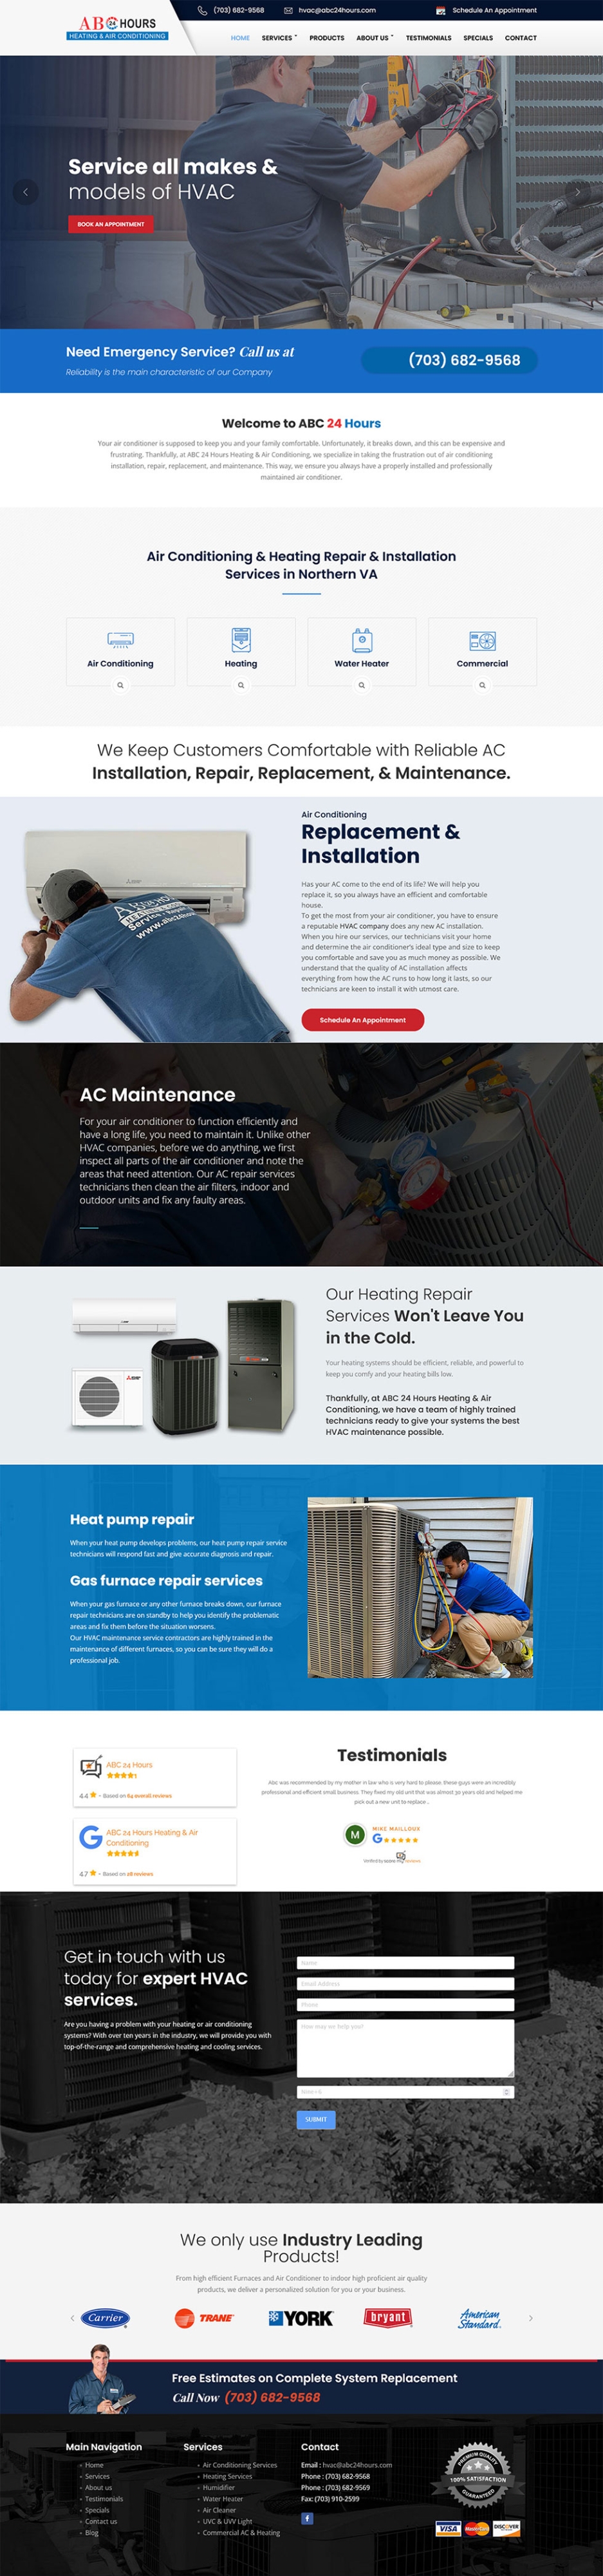 HVAC Web Design Services